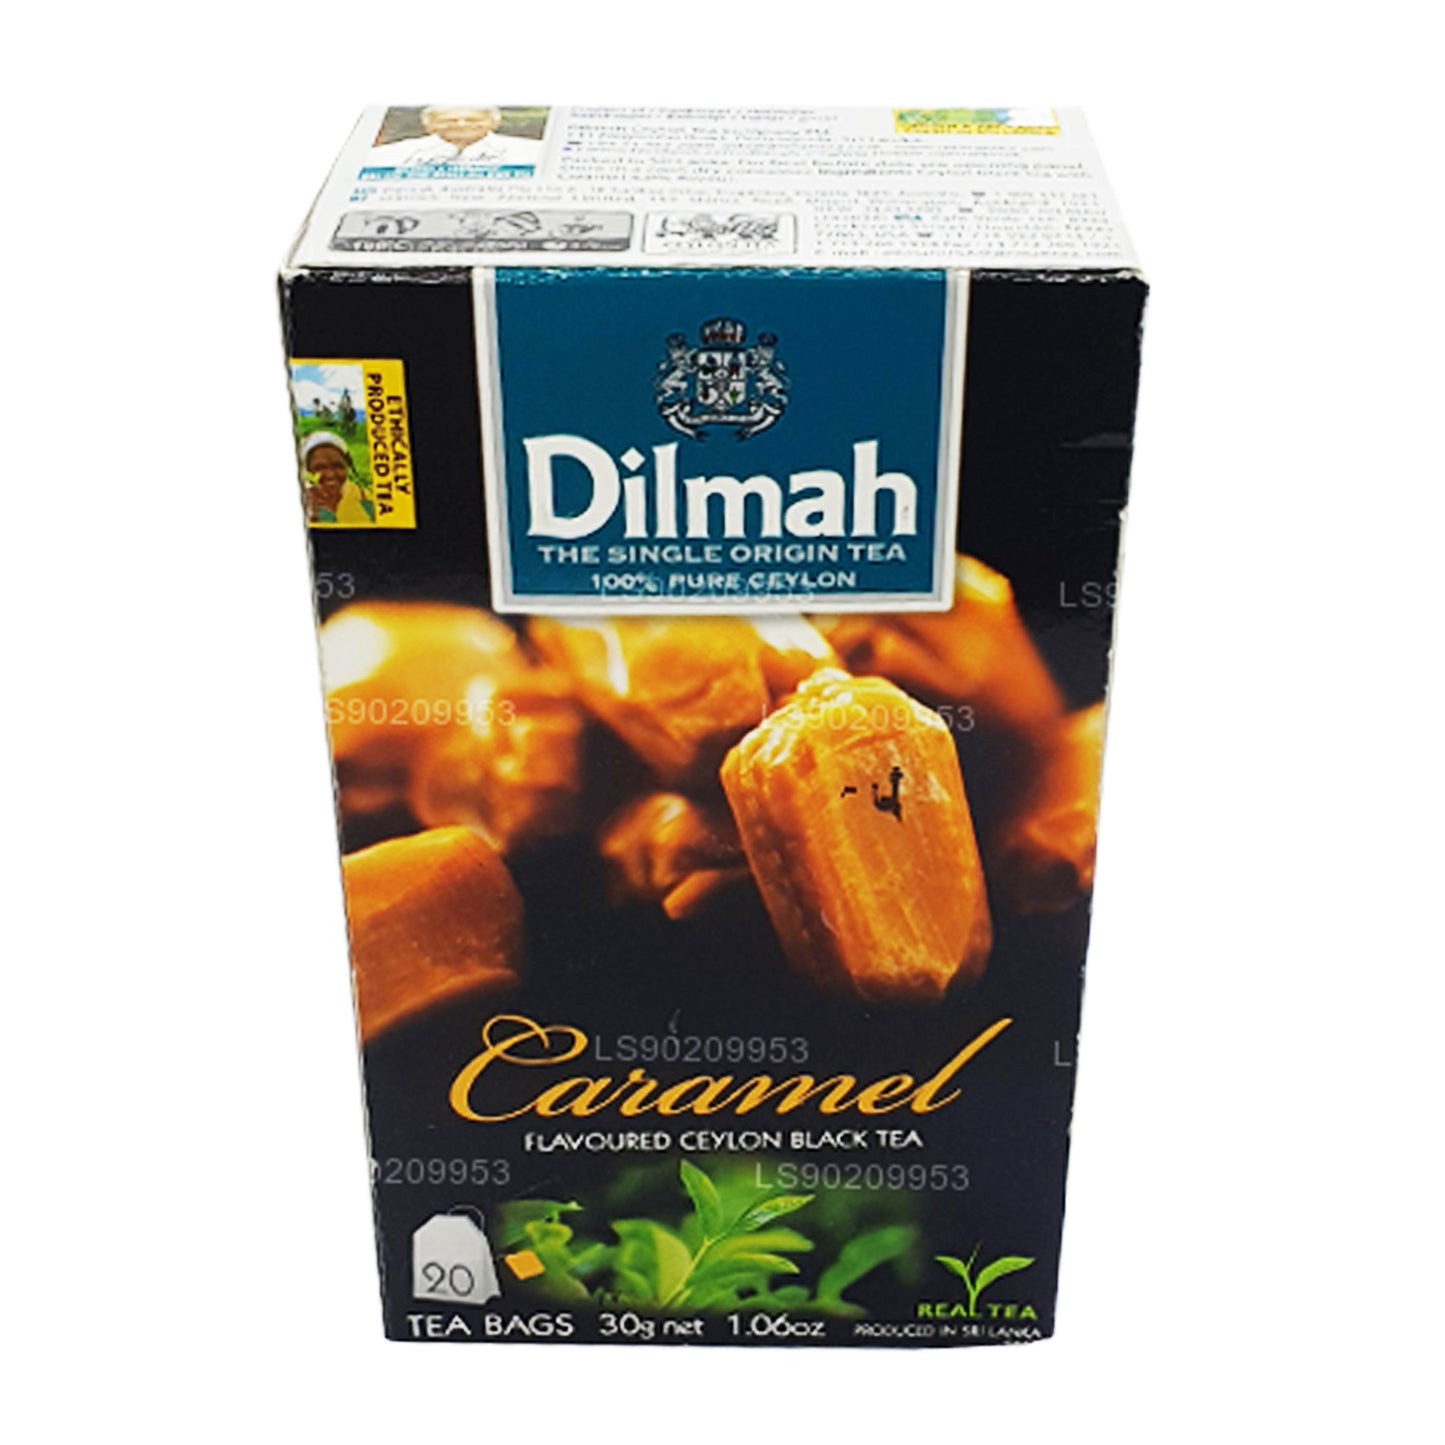 Dilmah cinnamon Flavored Tea (40g) 20 Tea Bags